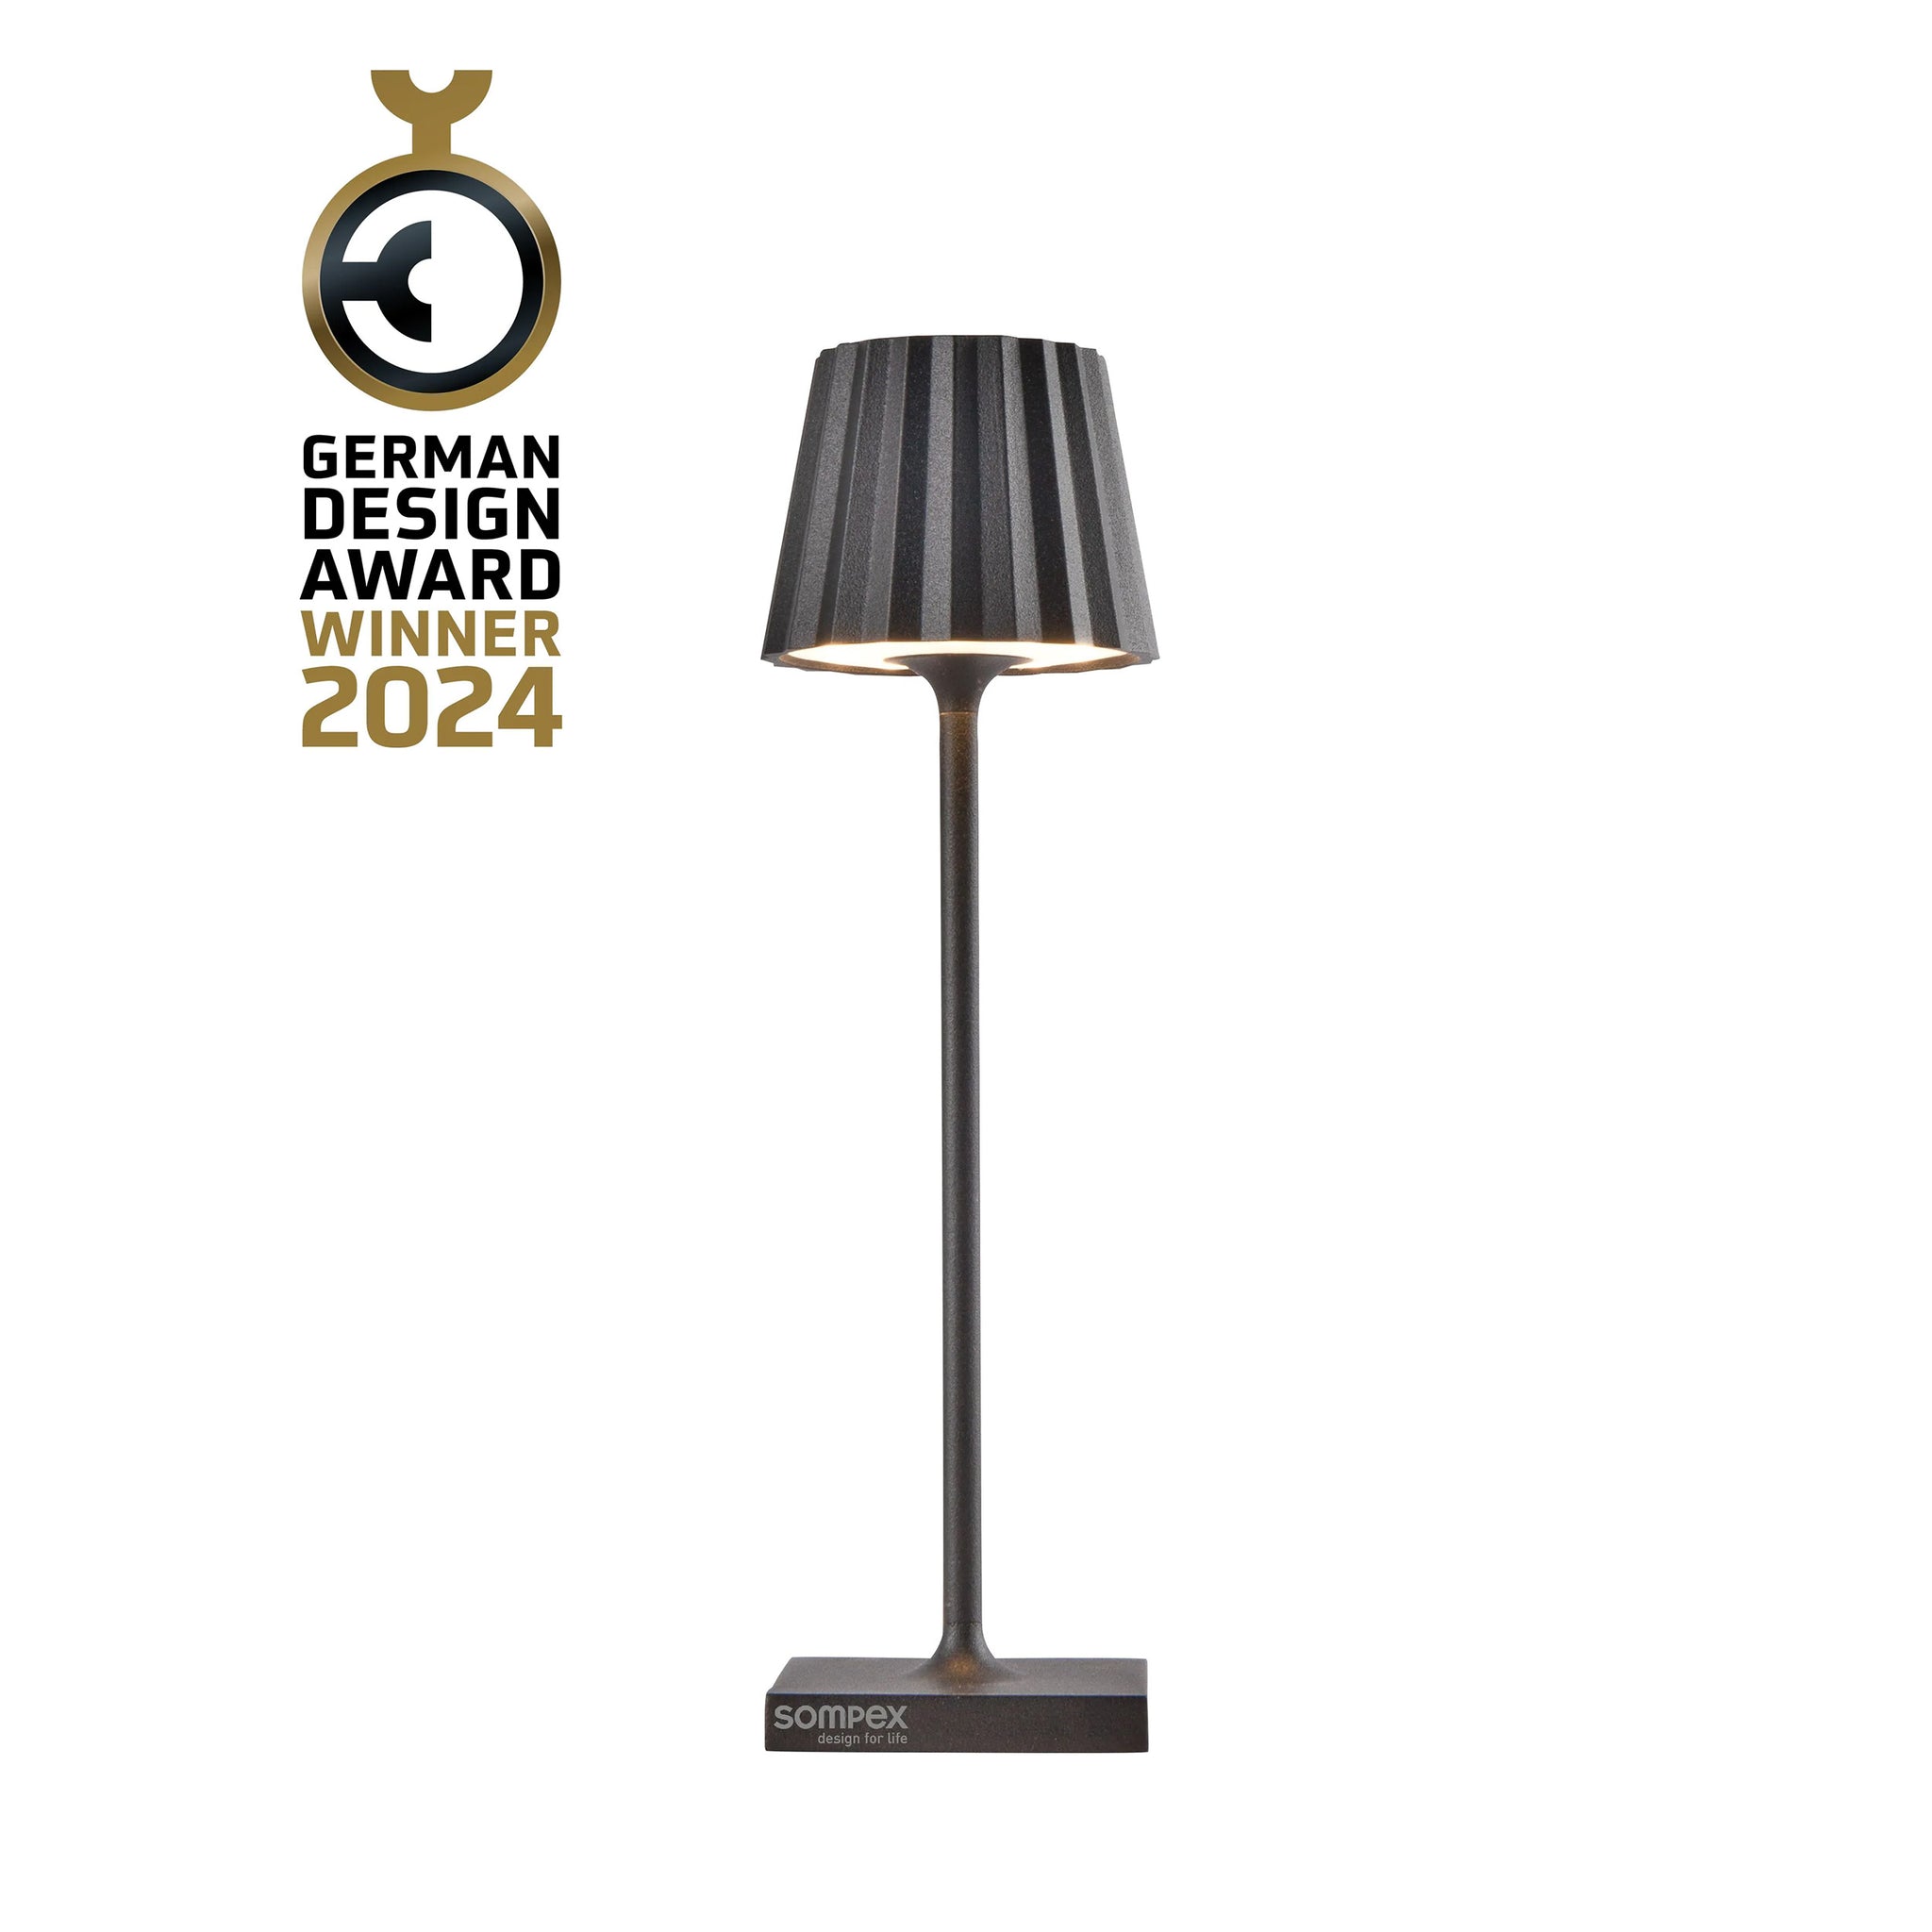 Sompex Troll Nano Antraciet│Oplaadbare Tafellamp│Buitenlamp│art. 78580│met logo German Design Award Winner 2024